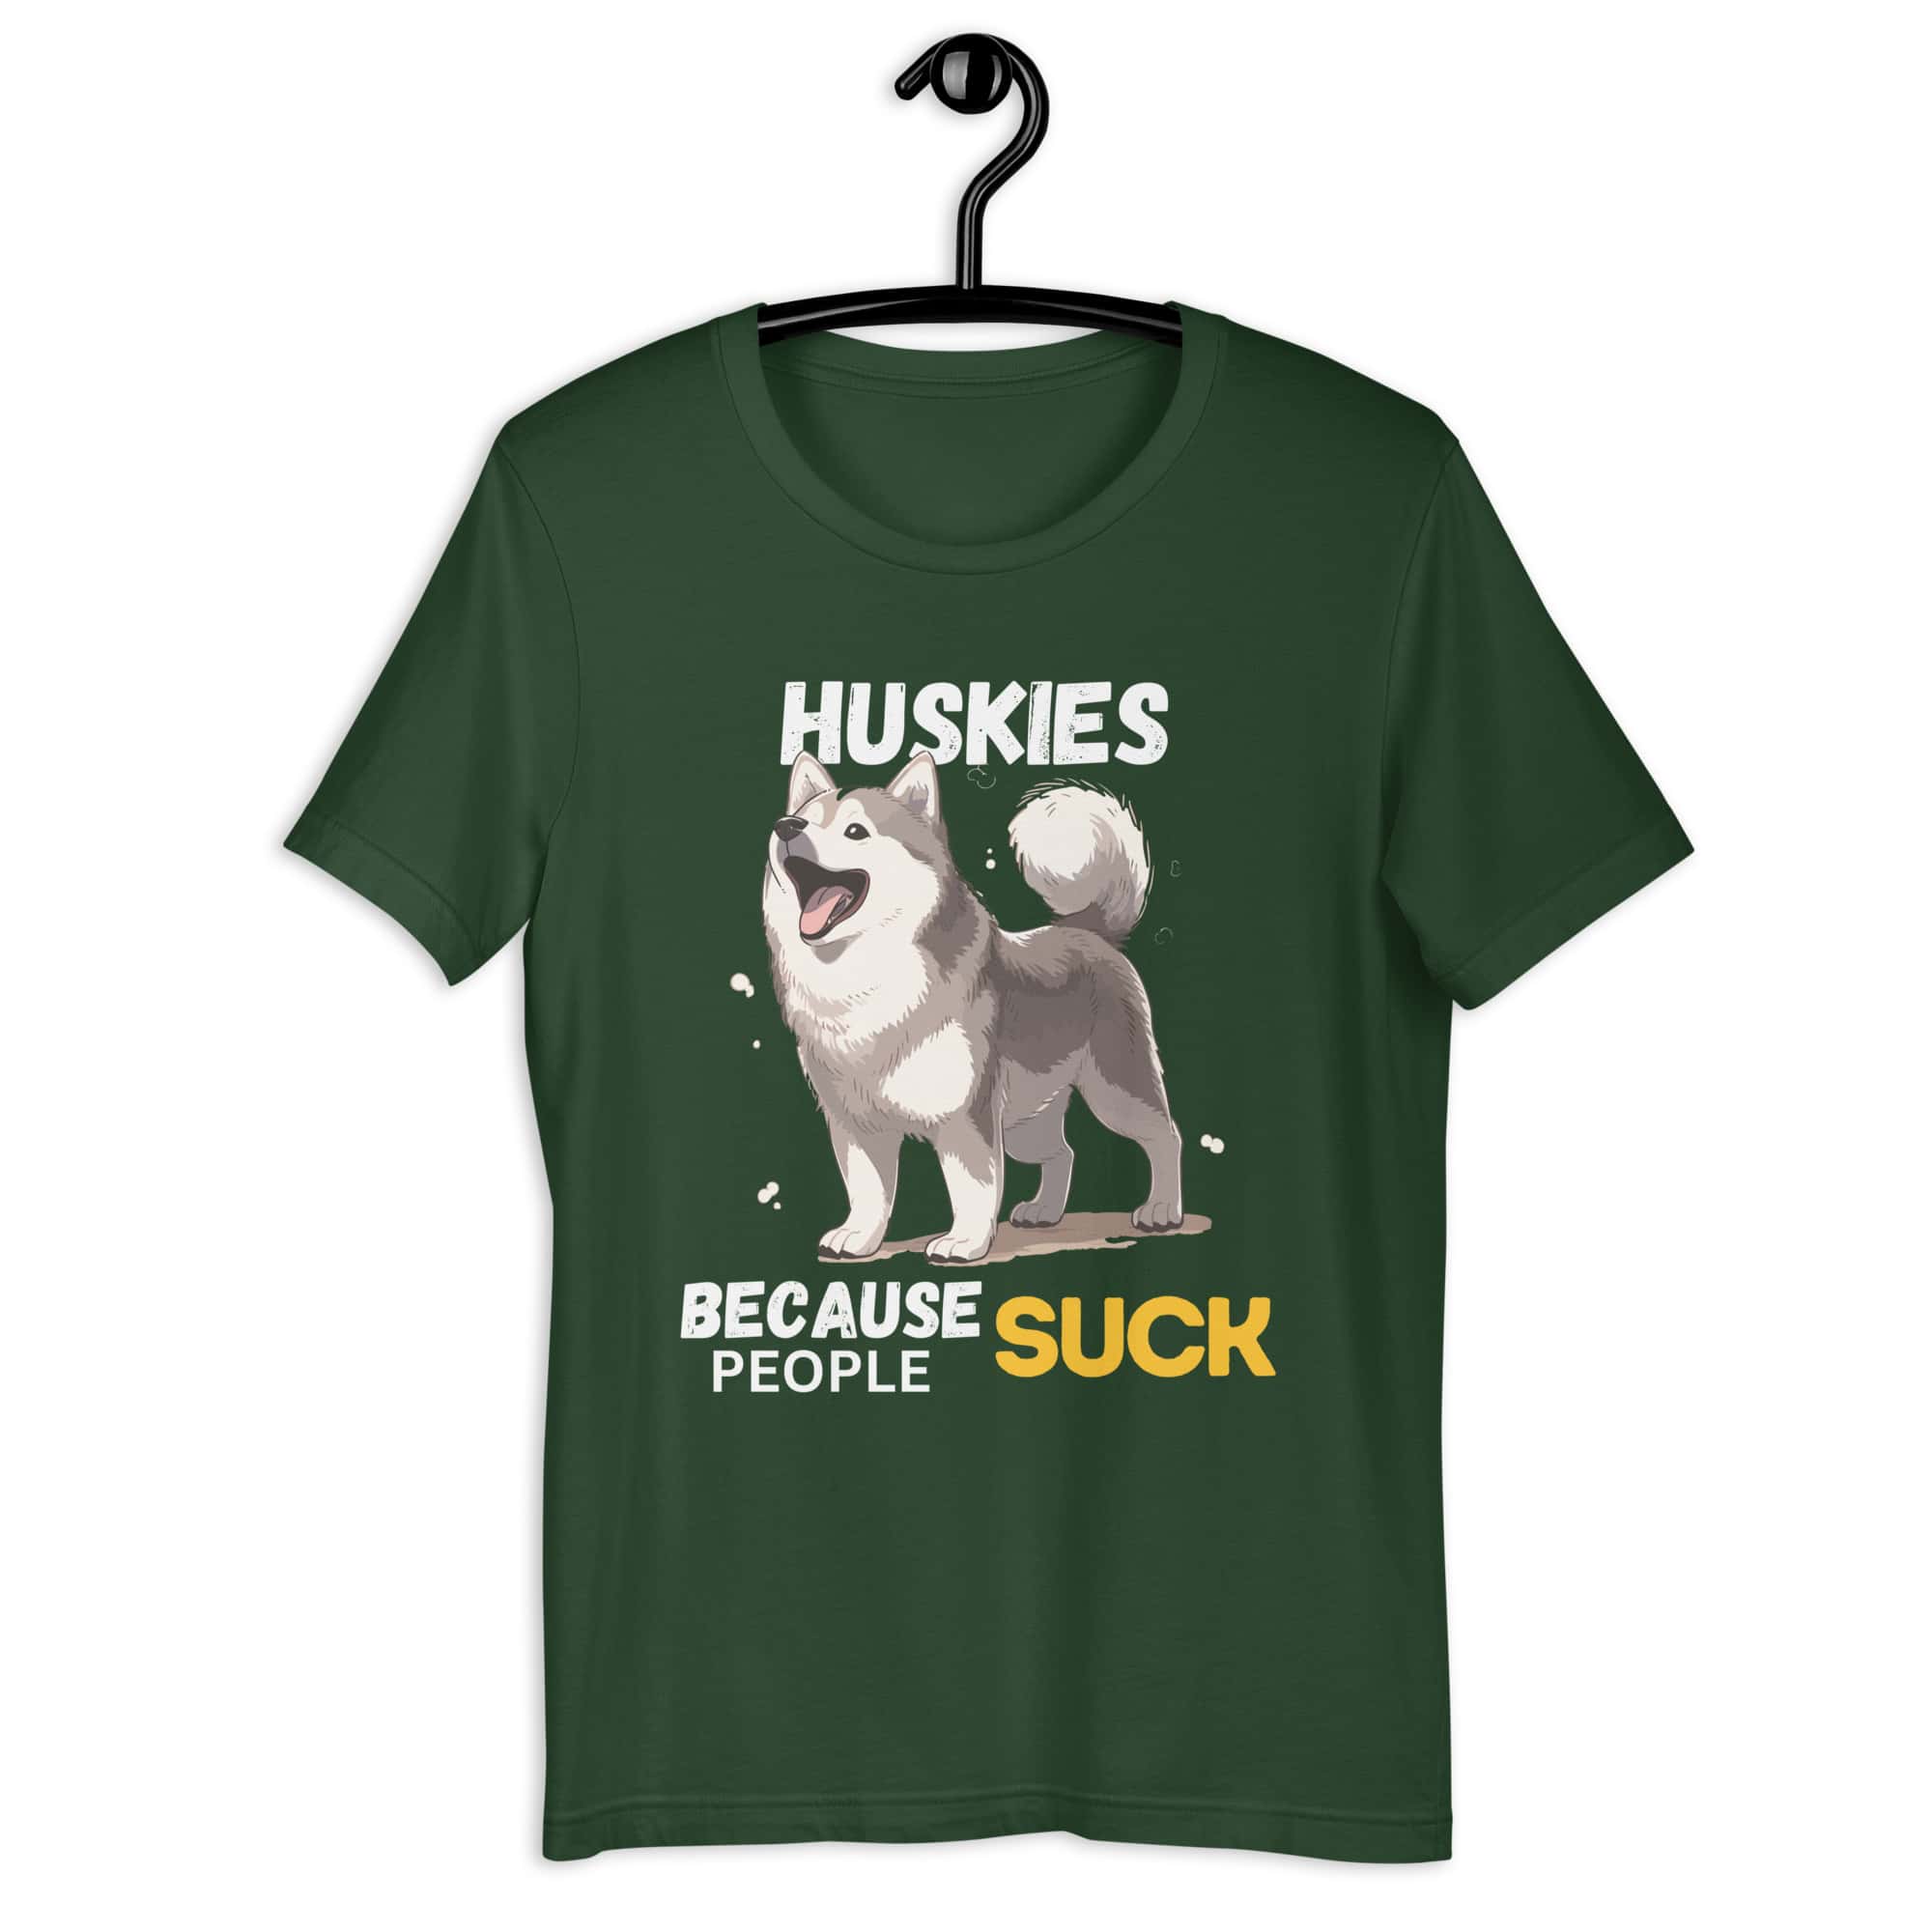 Huskies Because People Suck Unisex T-Shirt green